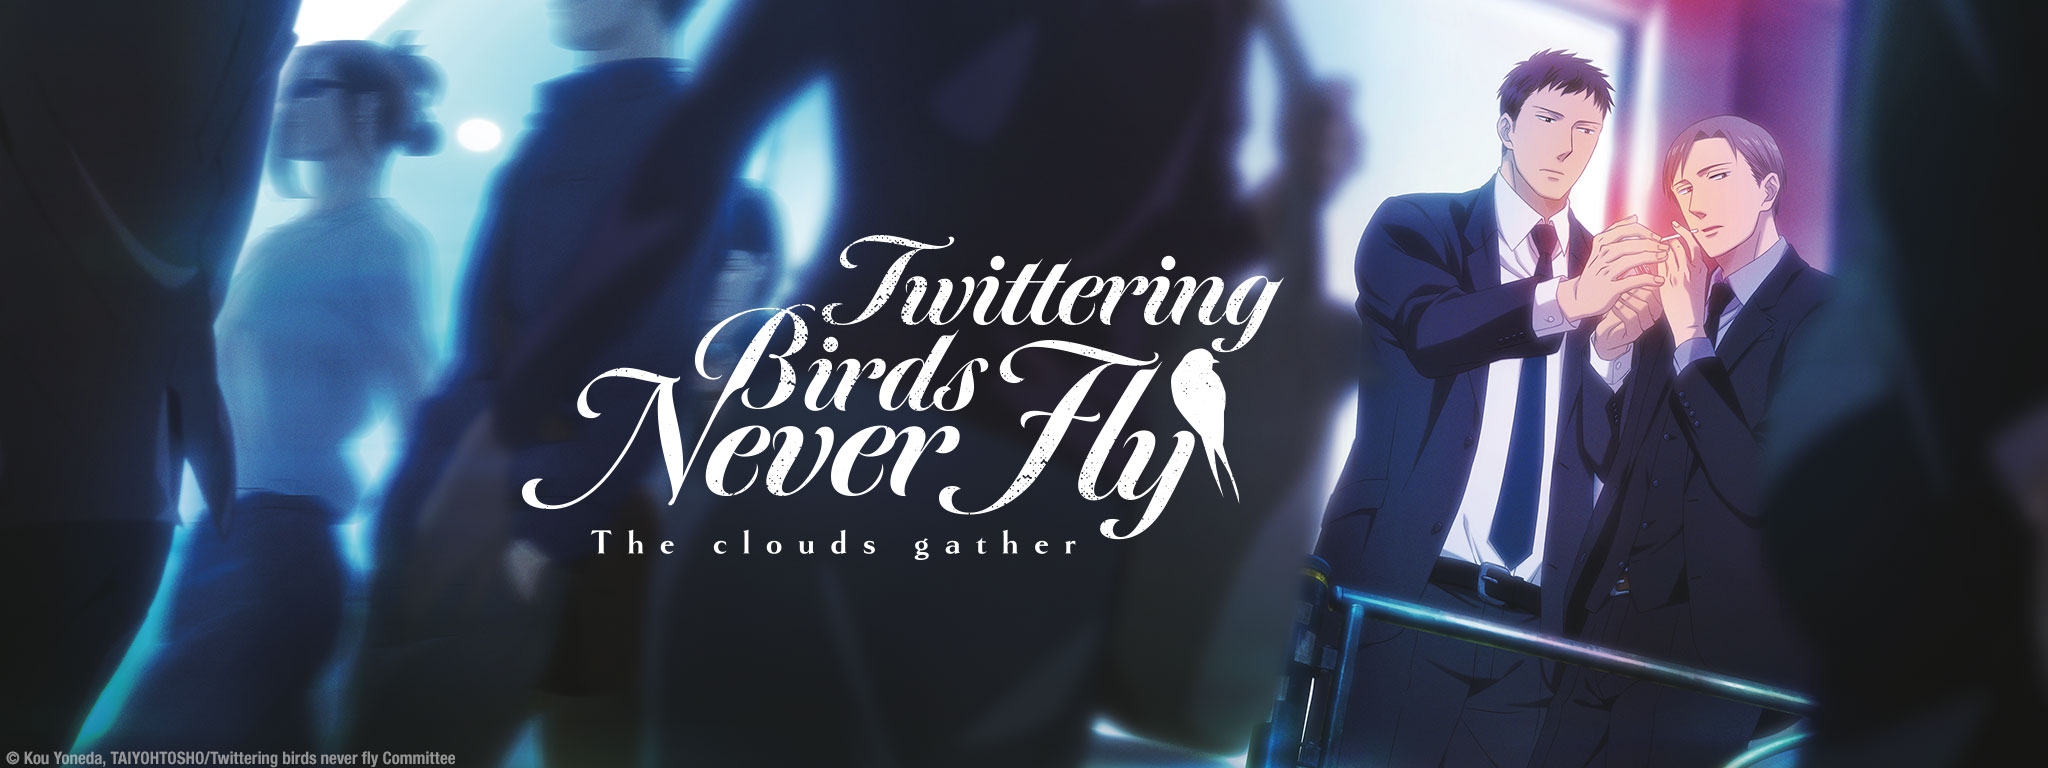 https://assets.sentaifilmworks.com/titles/BNF/twittering-birds-never-fly_BNF_01_KEY_2048x768.jpg